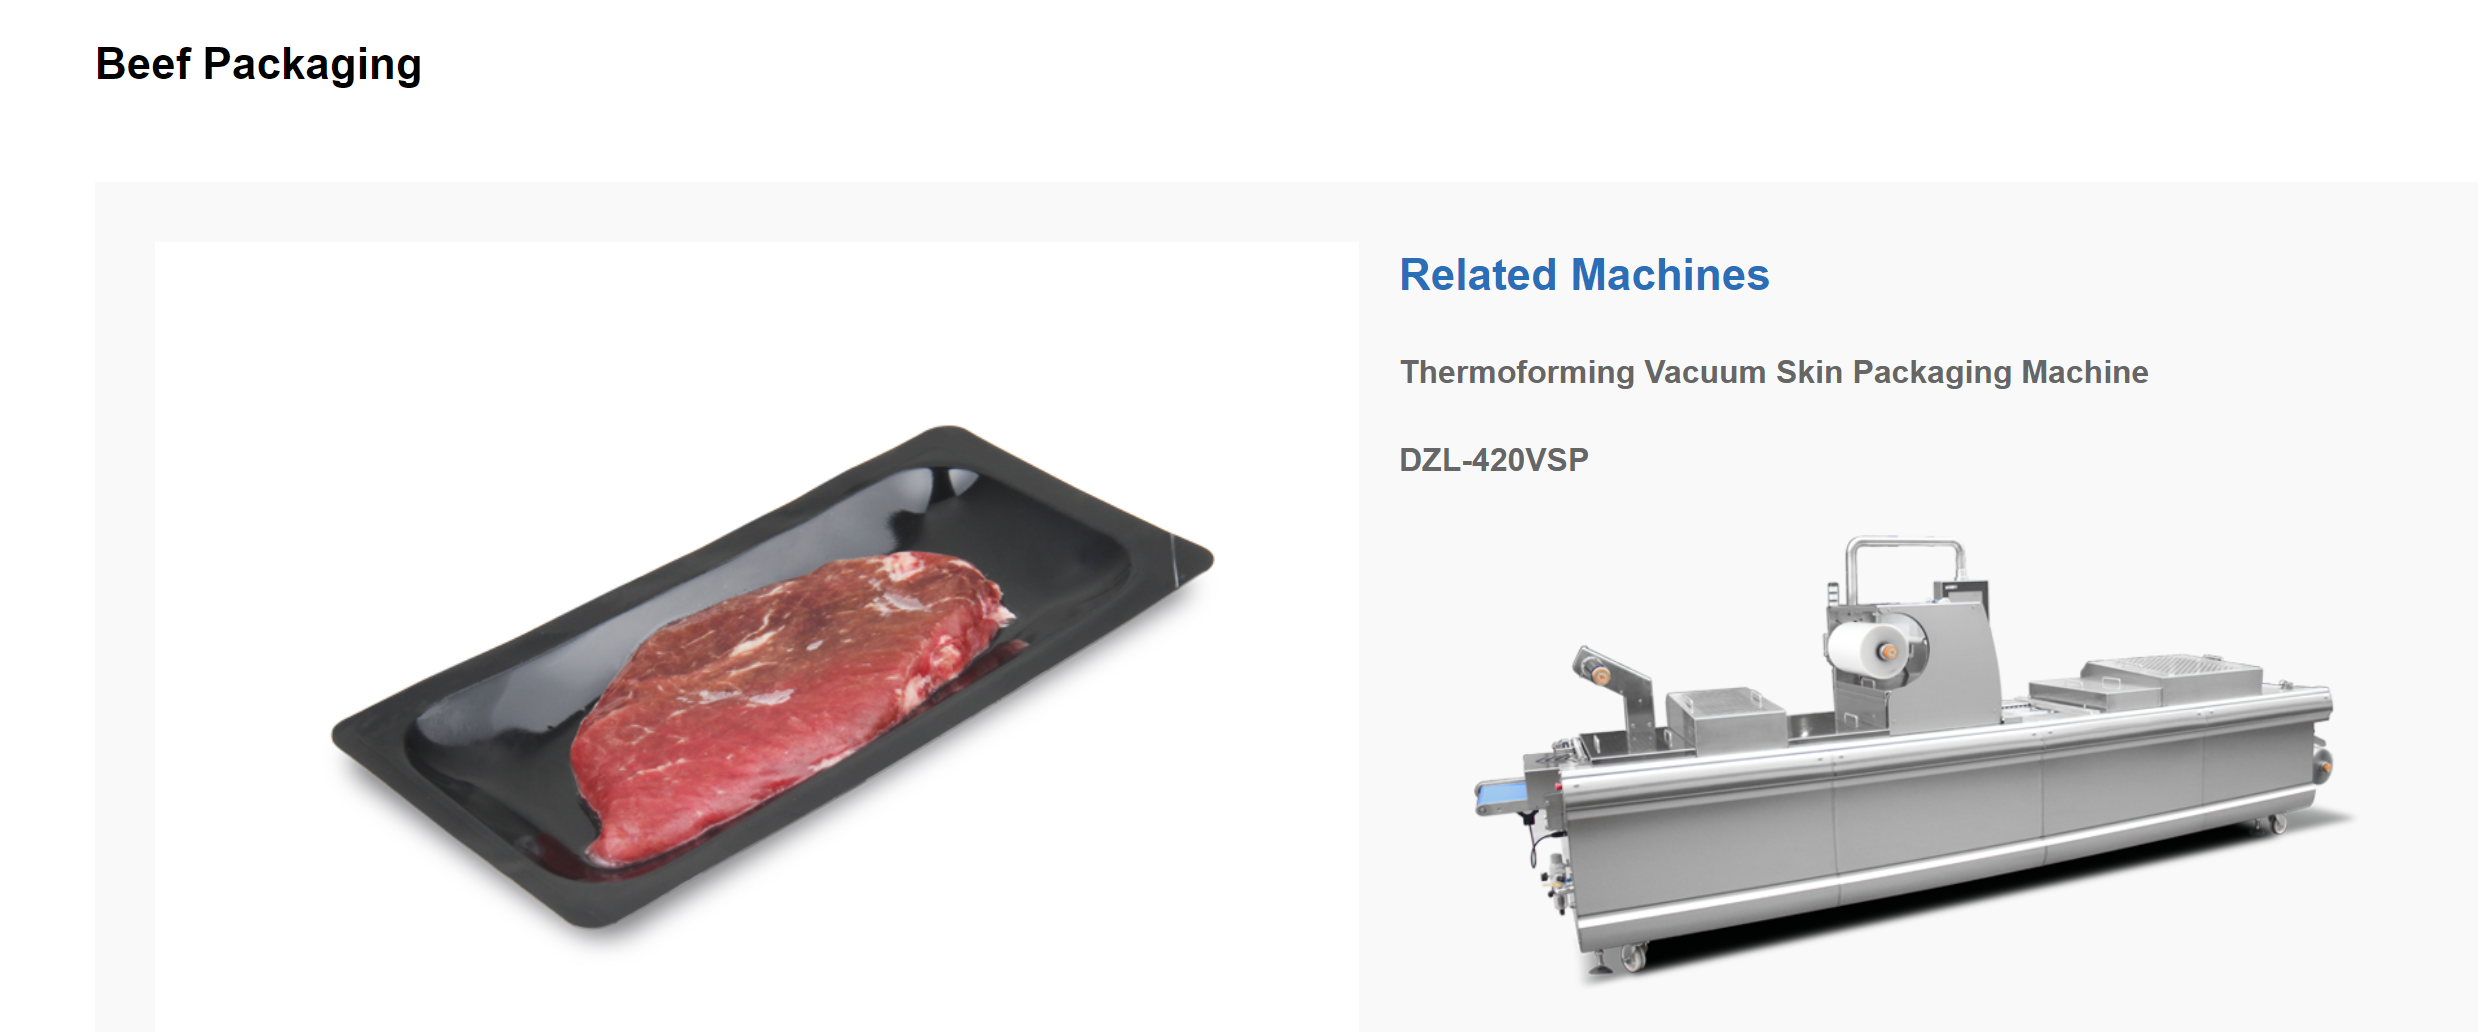 Qualiter utendum Cibo Thermoforming Vacuum Packaging Machination